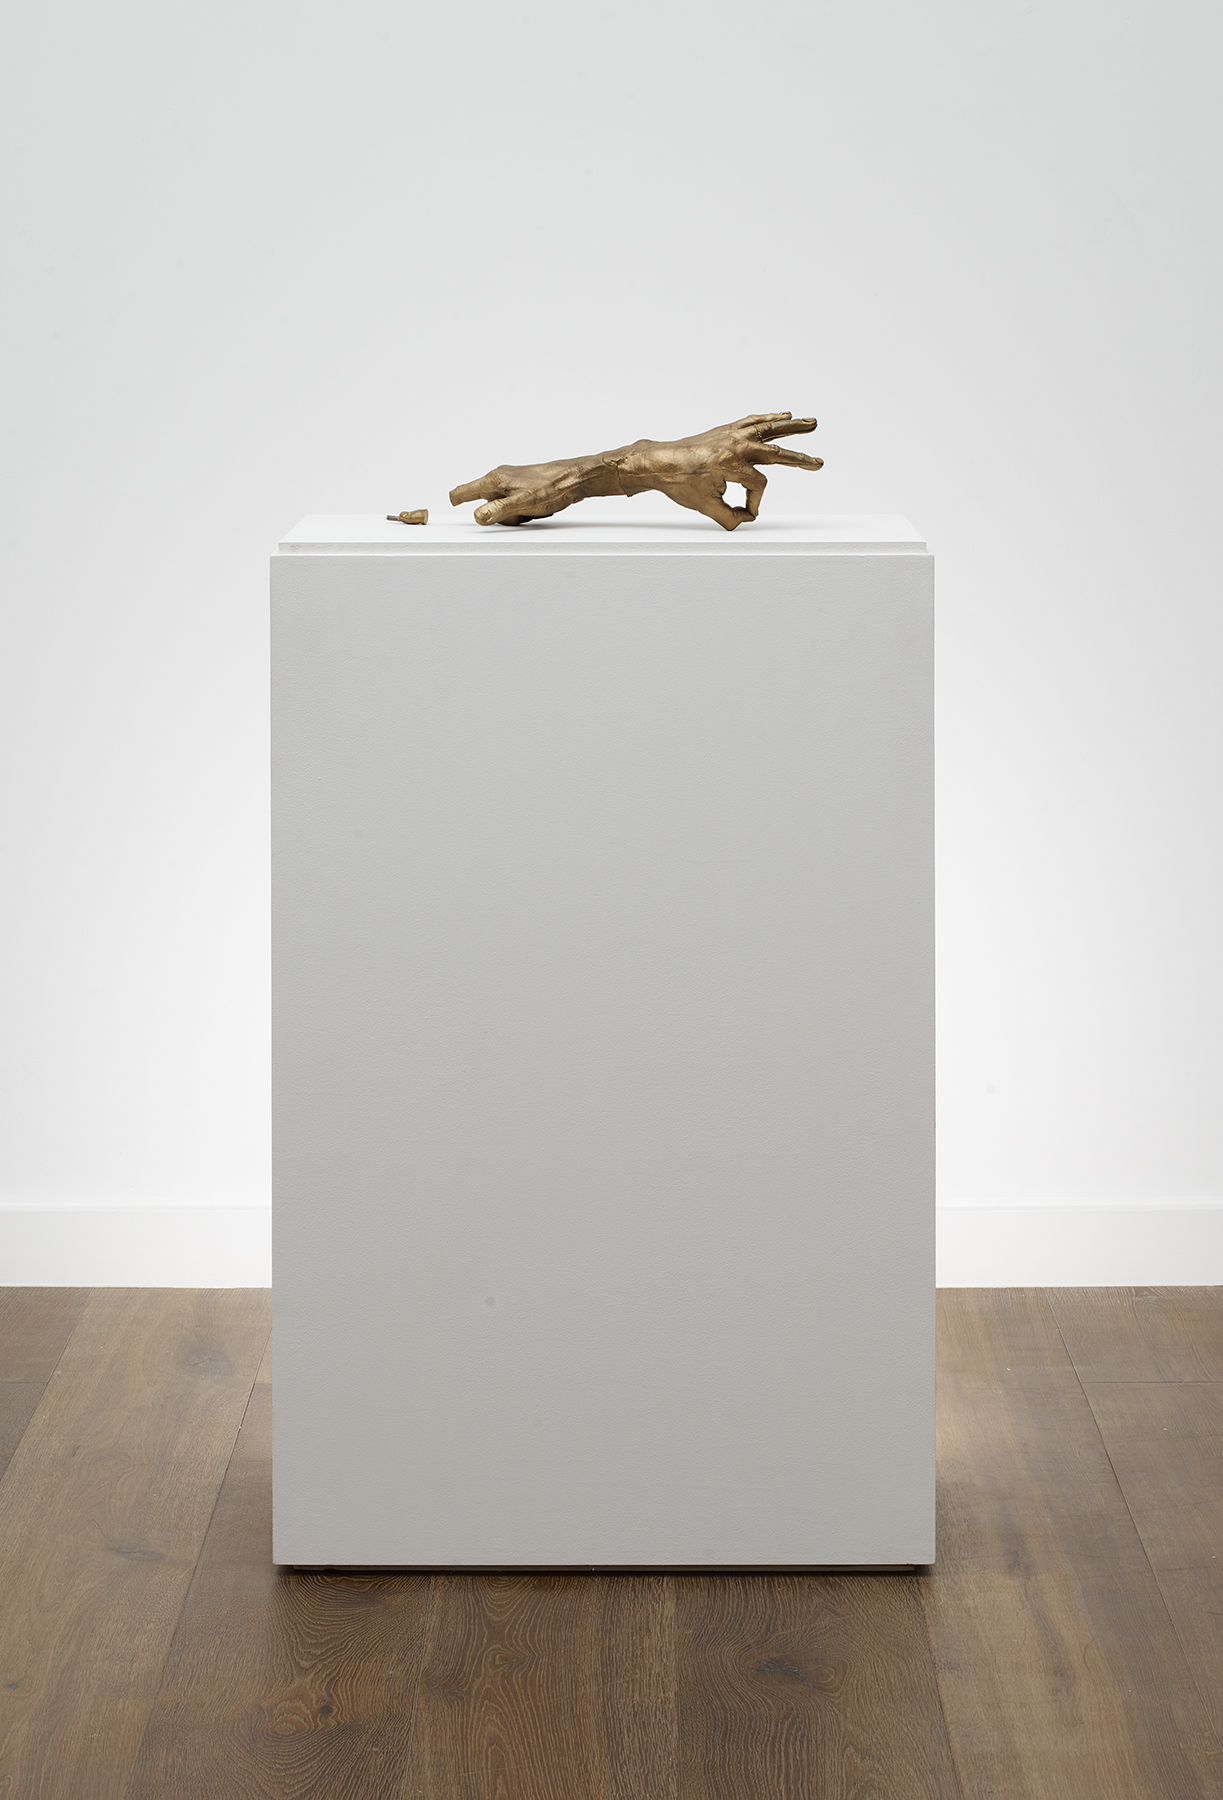 Installation view of Bruce Nauman's silicon bronze sculpture Hand Pair